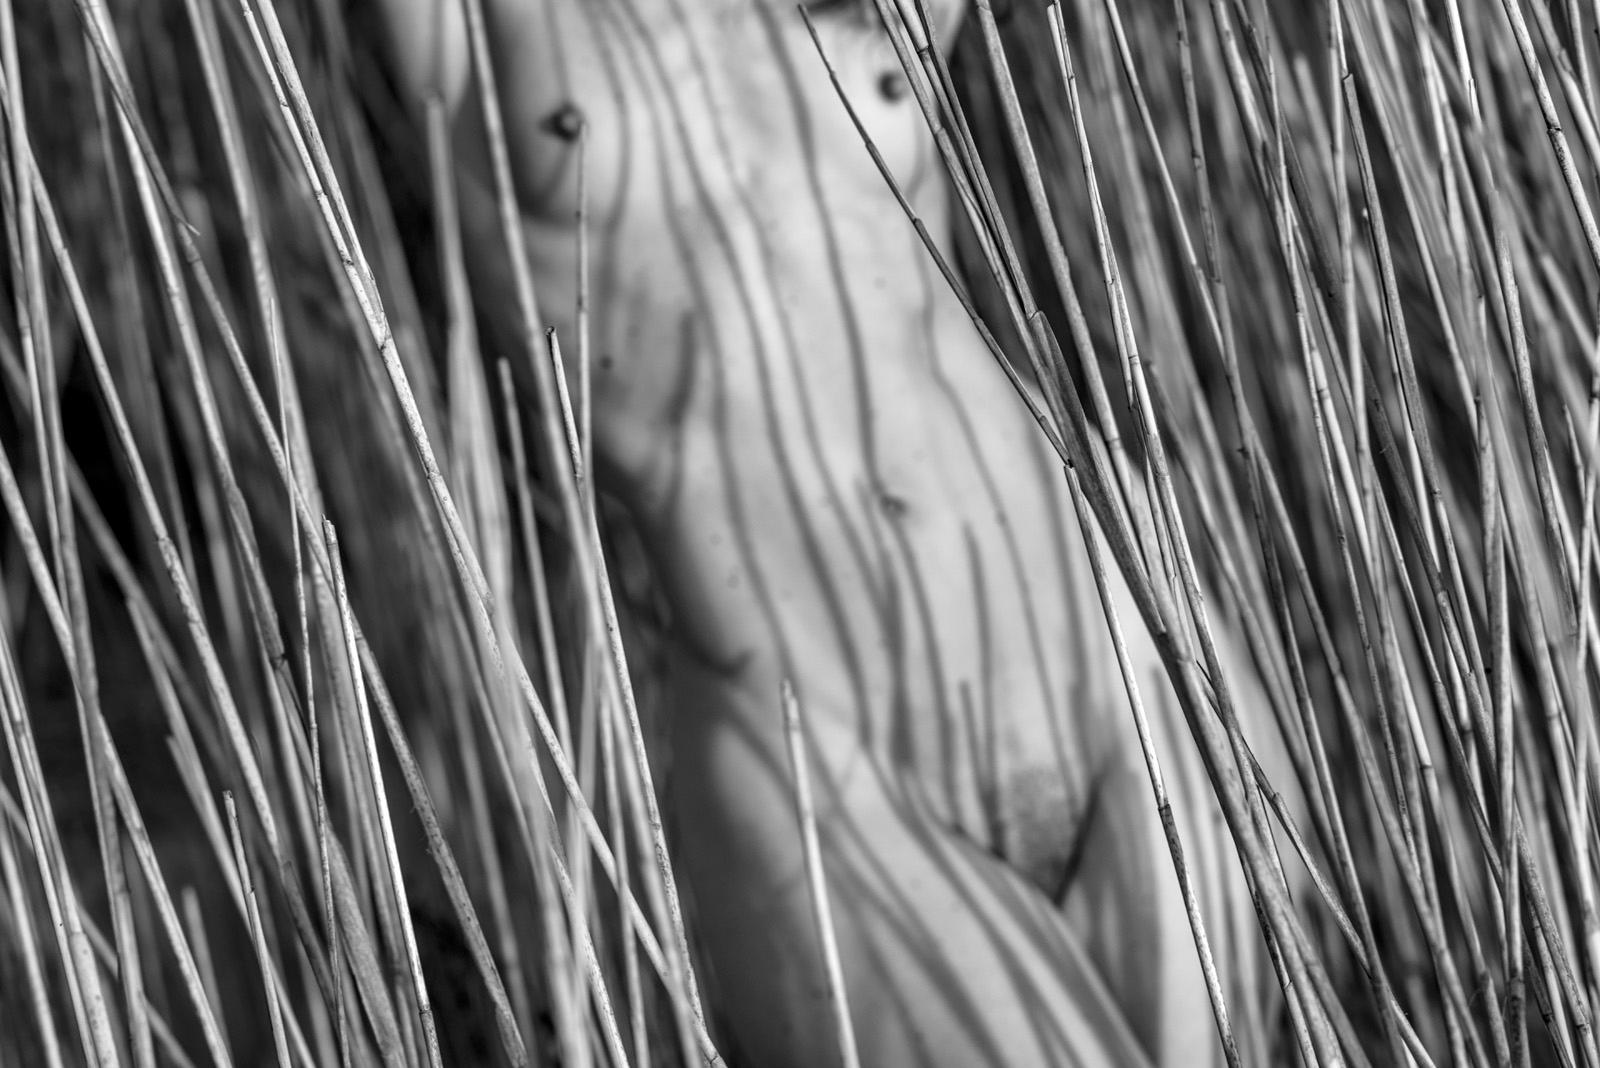 John Mazlish Nude Photograph - "Torso in Reeds"- Abstract Black & White Fine Art Nude